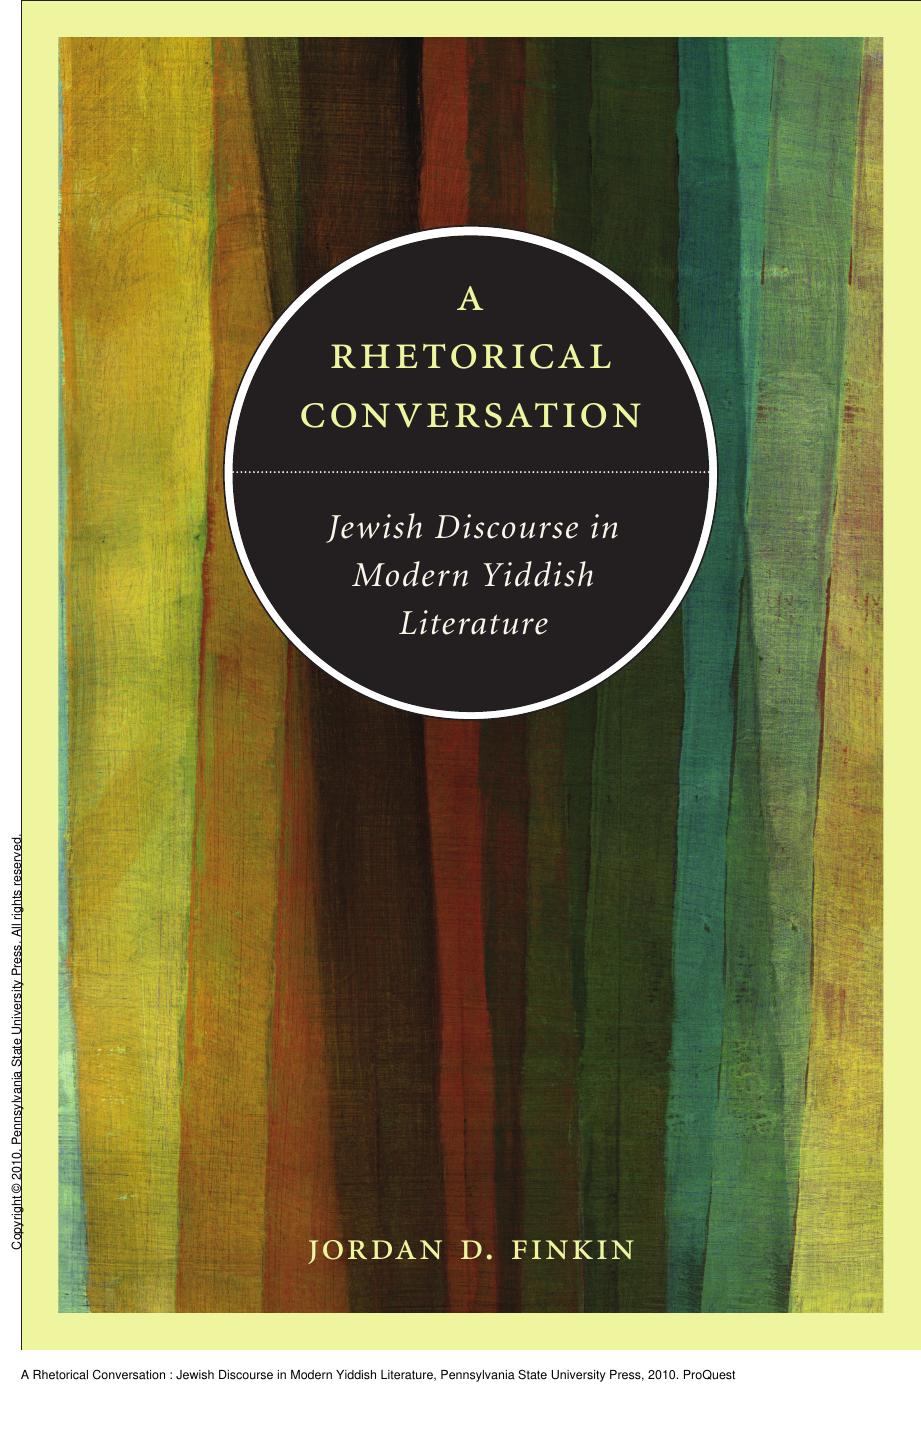 A Rhetorical Conversation : Jewish Discourse in Modern Yiddish Literature by Jordan D. Finkin